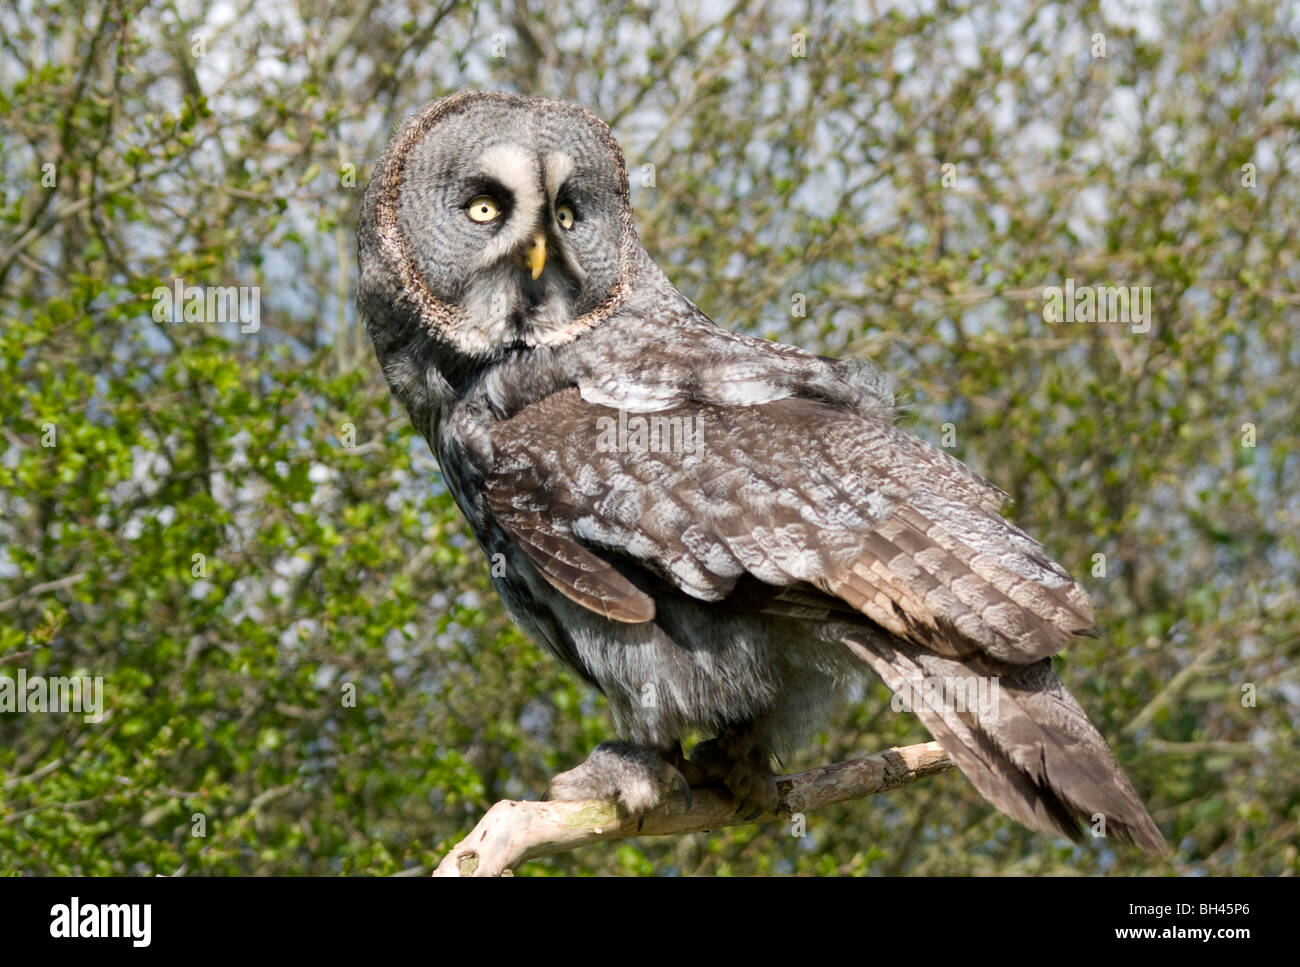 Great grey owl (Strix nebulosa). Adult bird perched on branch. Stock Photo